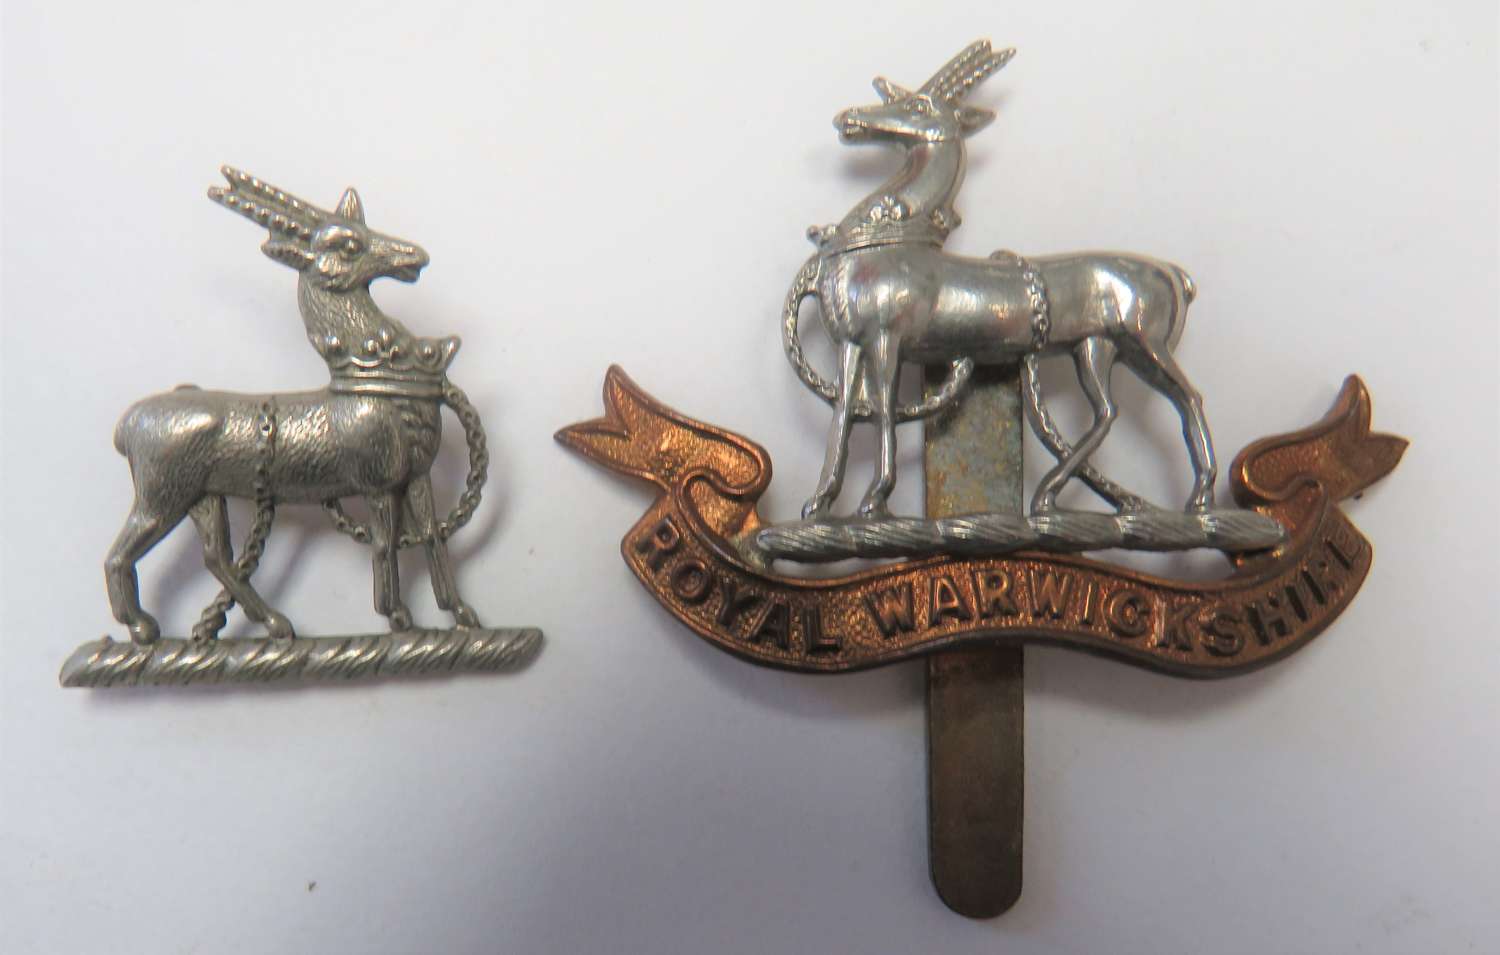 Royal Warwickshire Regiment Cap and Collar Badges